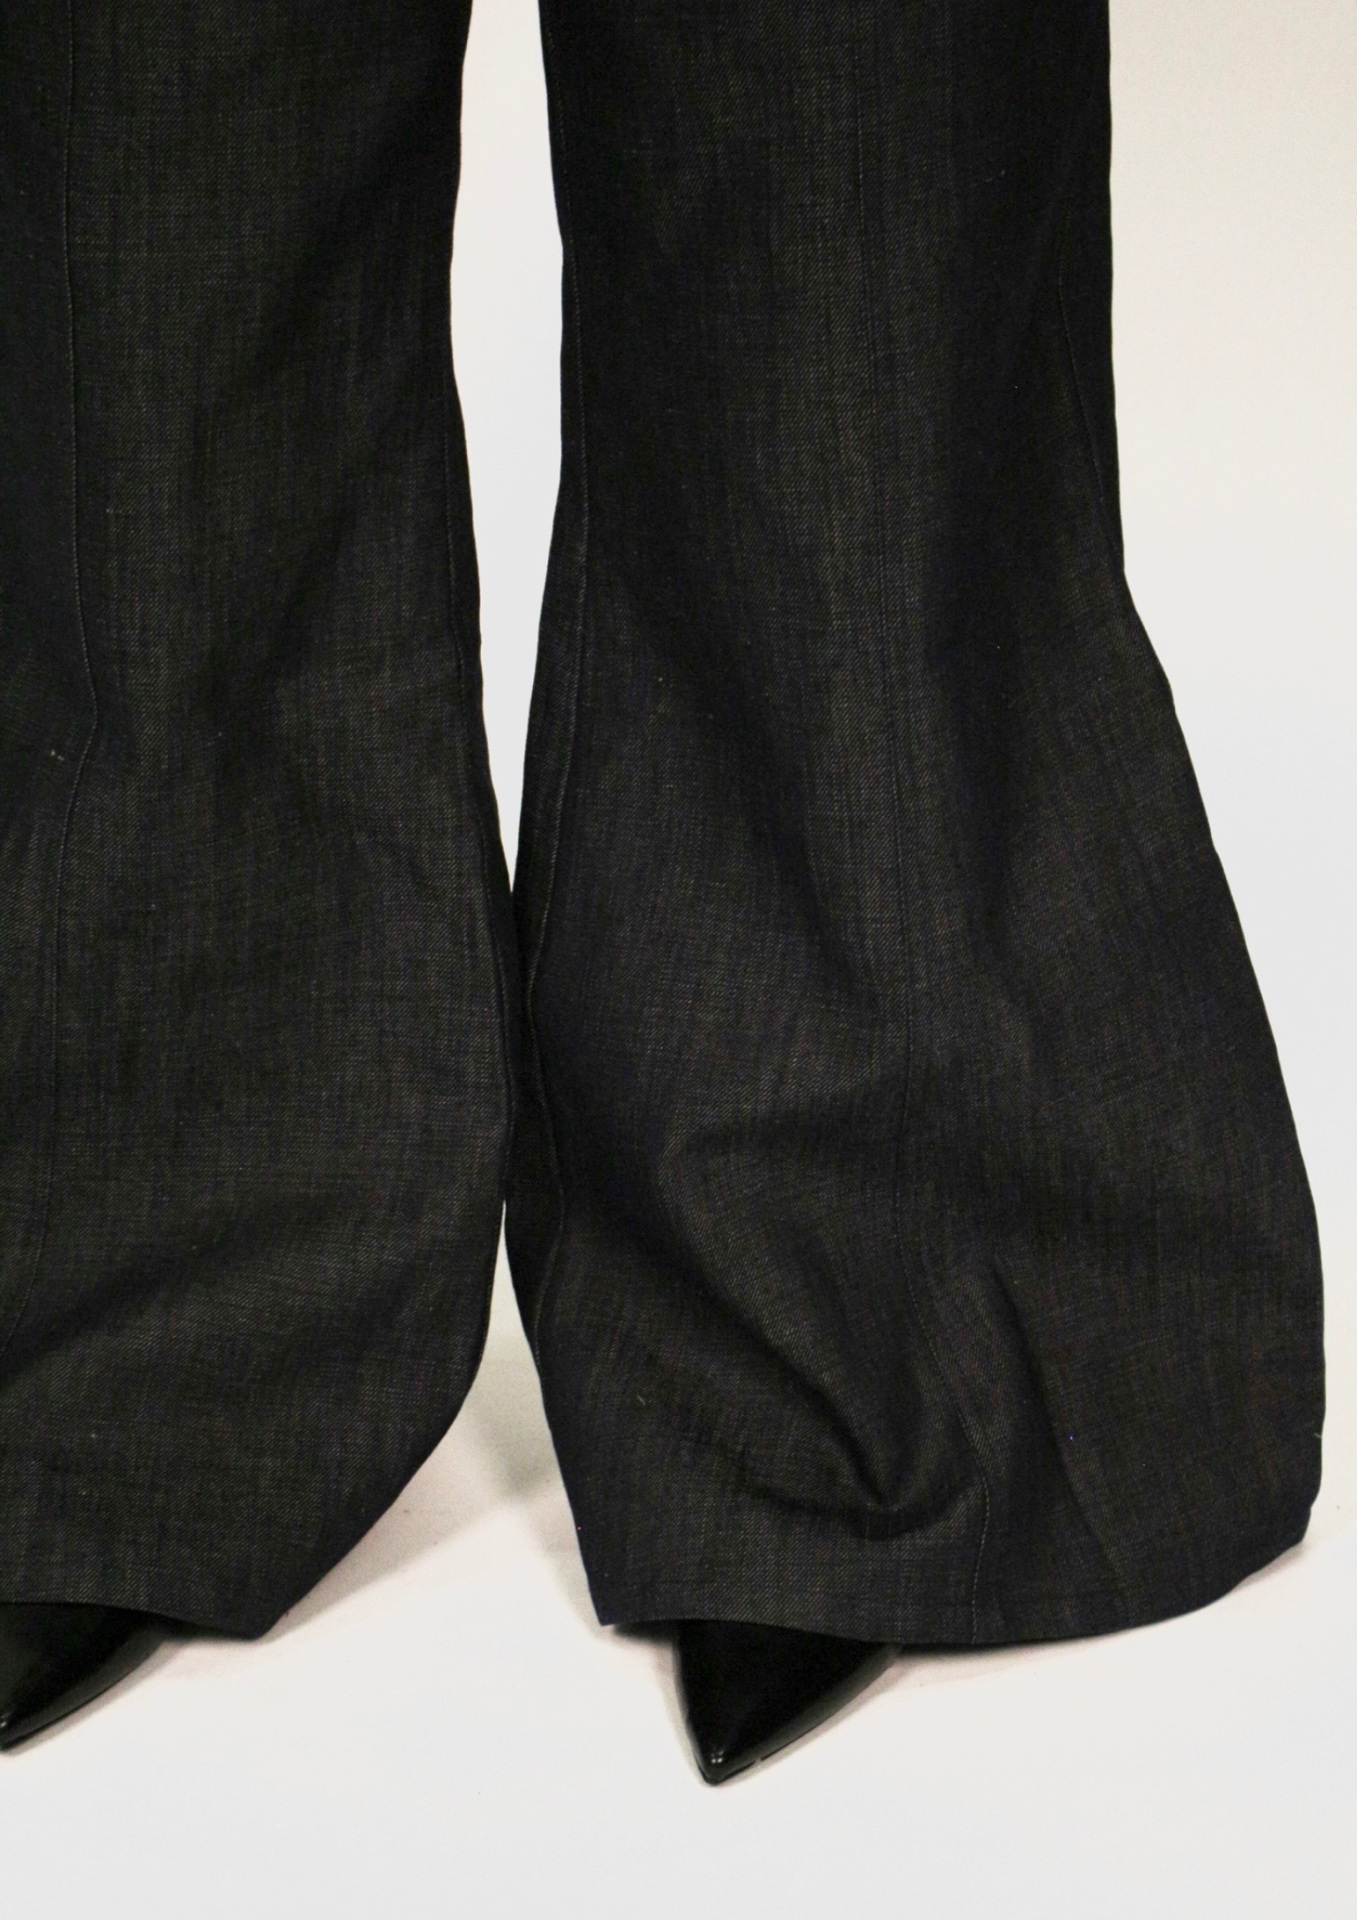 Bottom of flared charcoal trouser legs